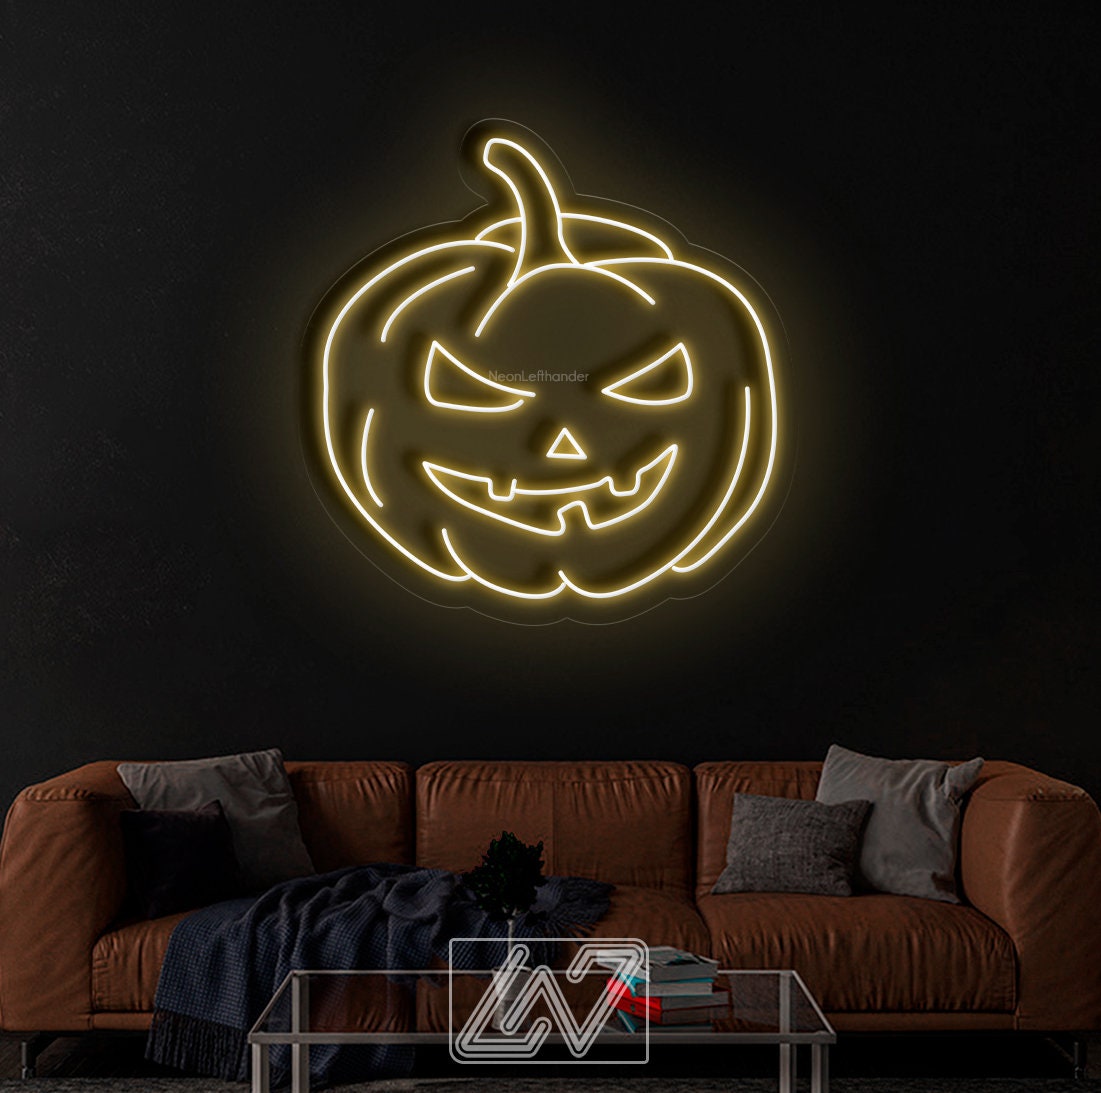 Halloween Pumpkin  - LED Neon Sign, Spooky Halloween Led Decor, Scary Halloween, Halloween Light Decor, Custom Neon Sign